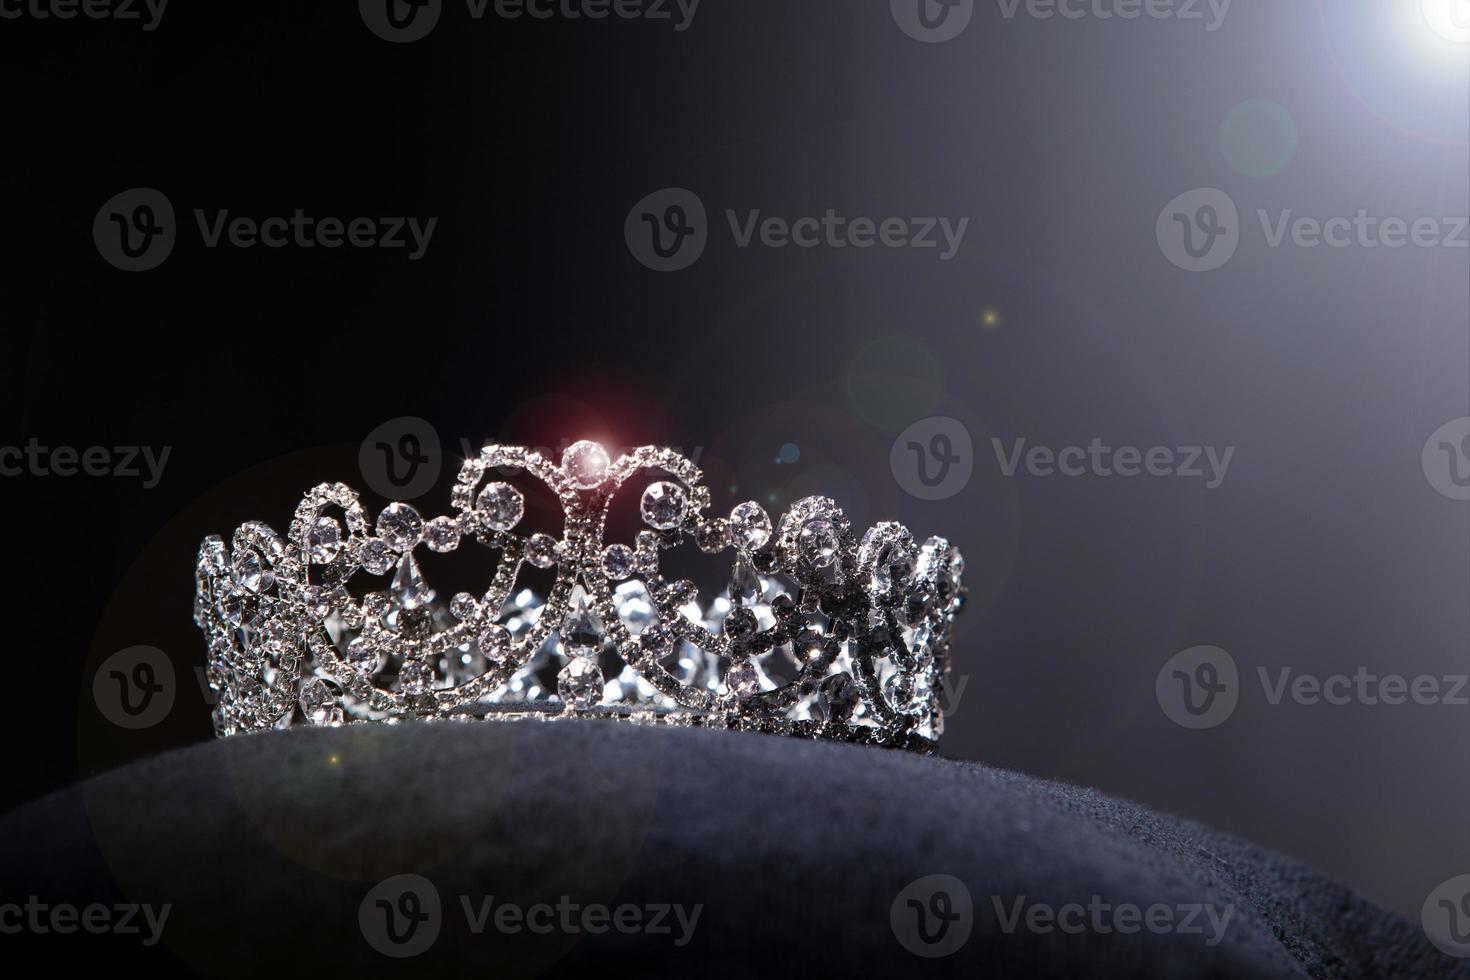 coroa de prata de diamante para concurso de beleza de concurso de miss, joias de tiara de cristal decoradas com pedras preciosas e fundo escuro abstrato em tecido de veludo preto, espaço de cópia de macro fotografia para logotipo de texto foto